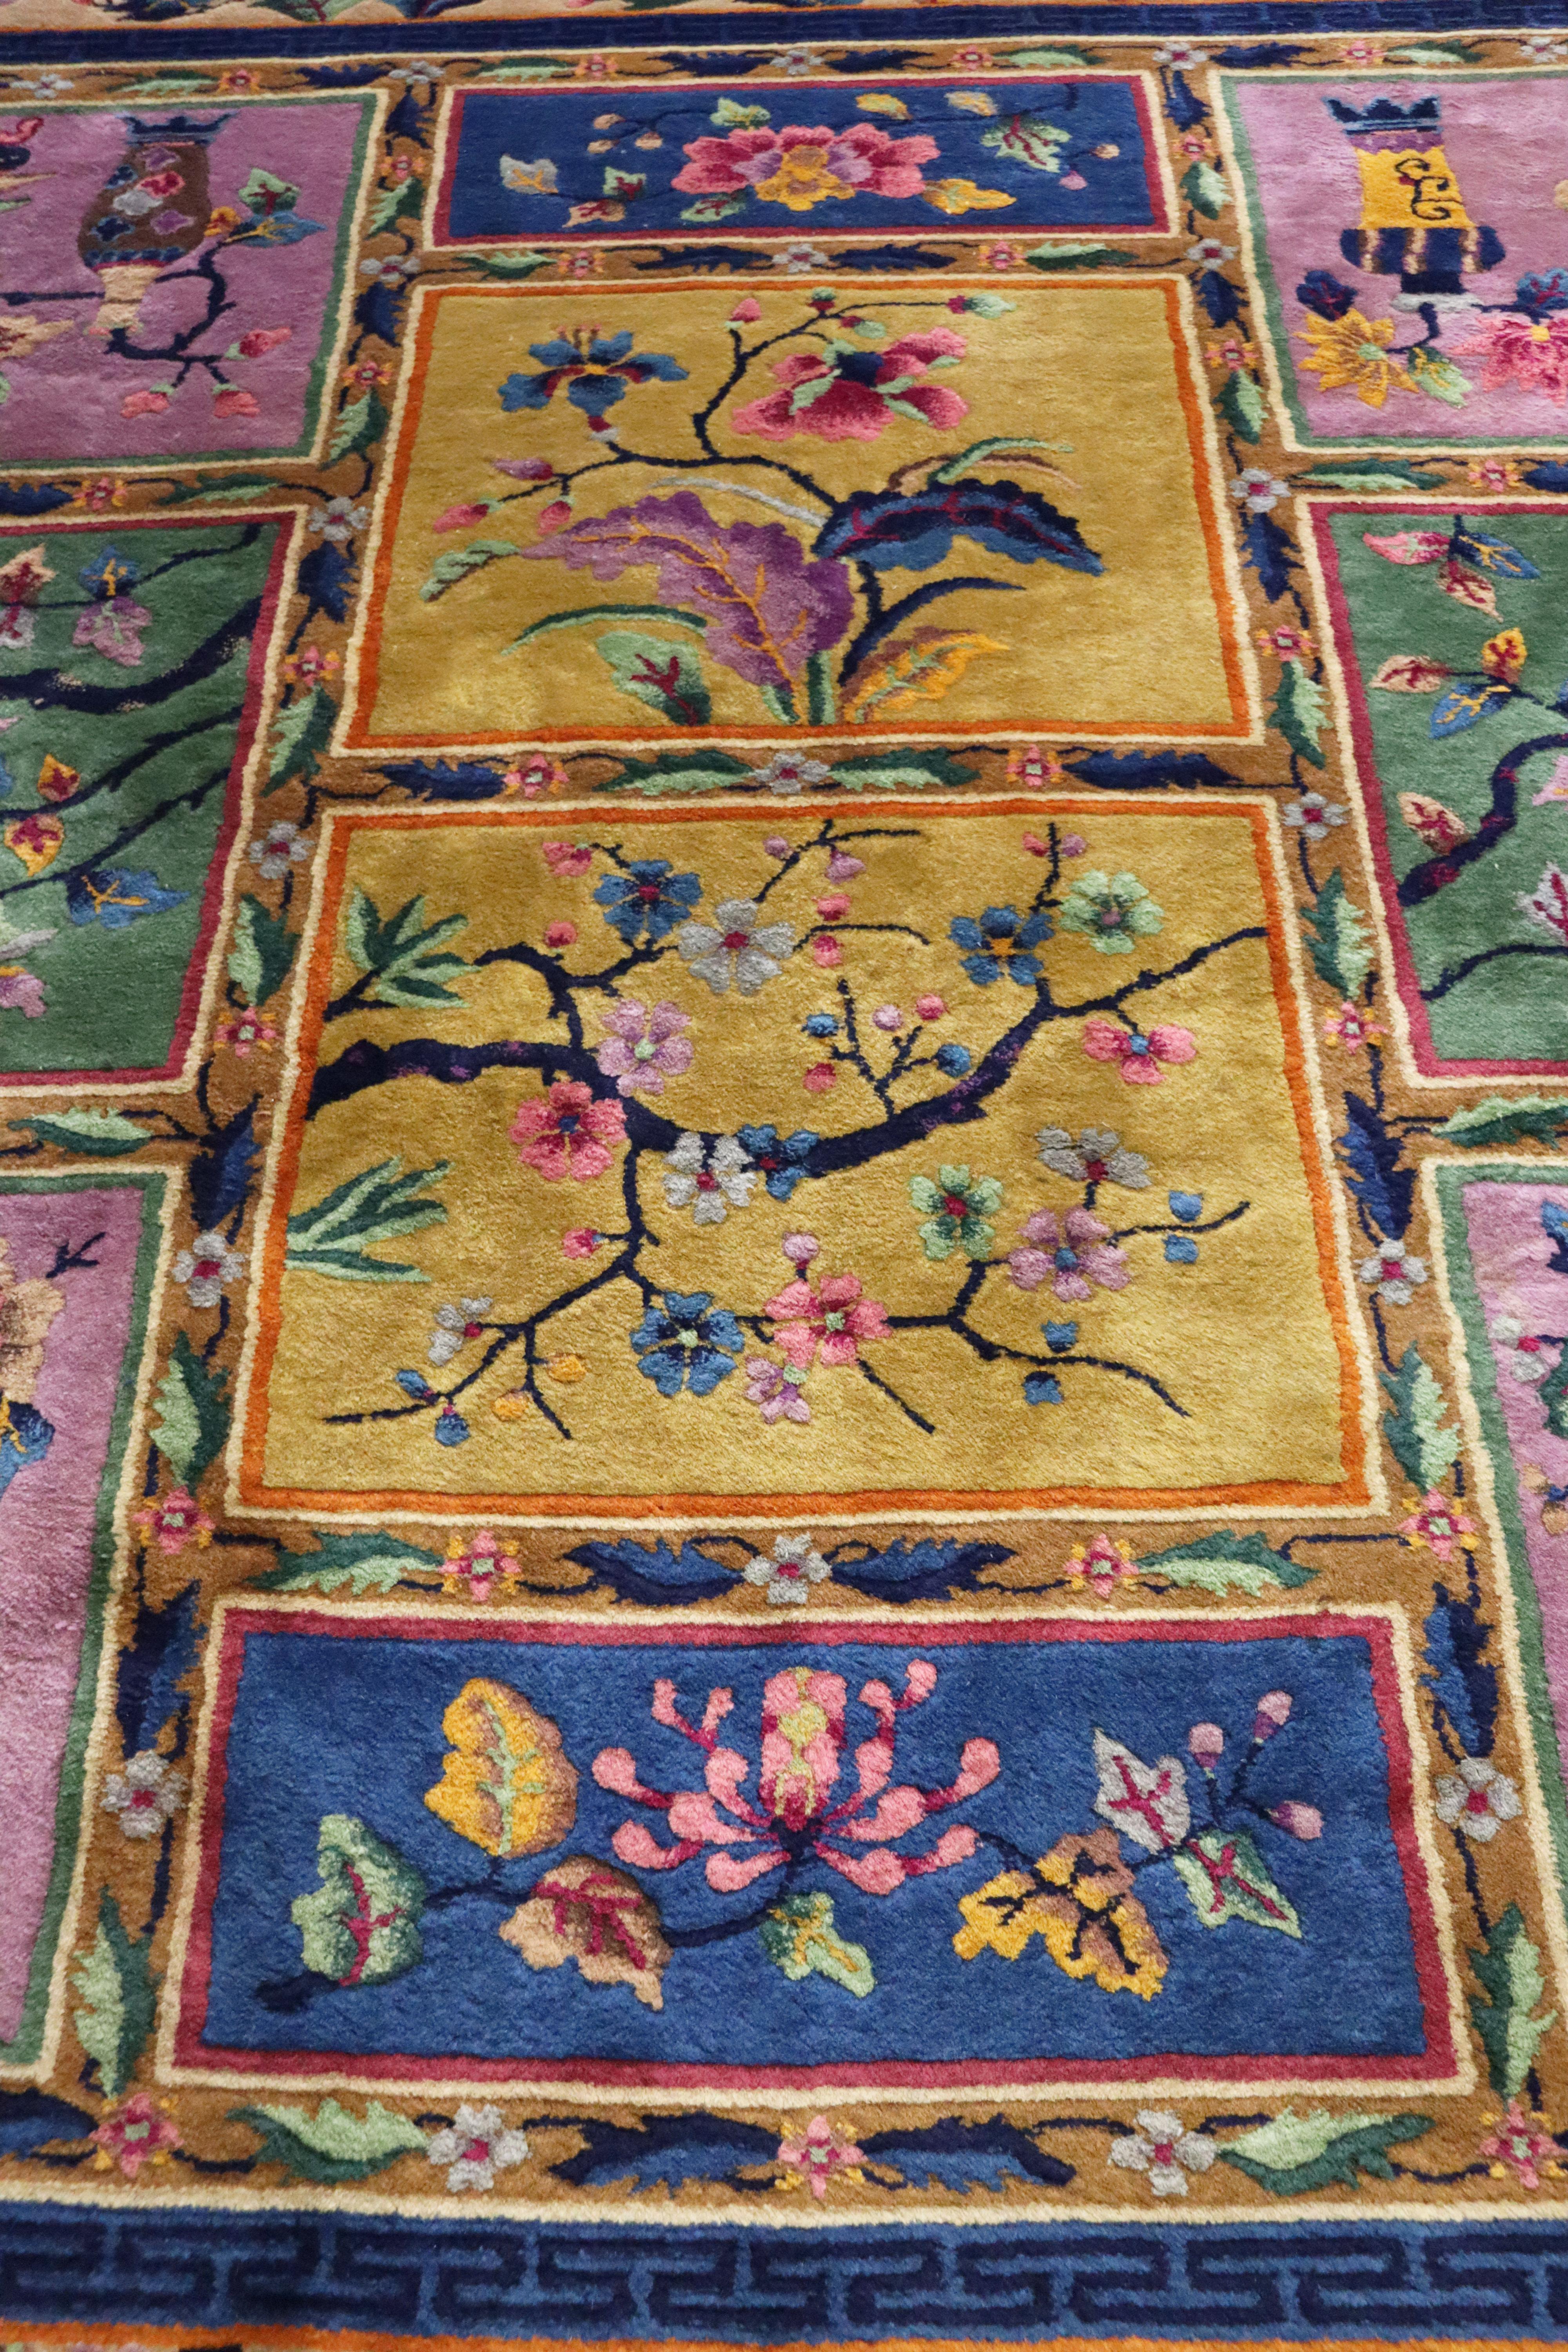 Antique Art Deco Chinese carpet, Most Unusual, 8' x 9'9